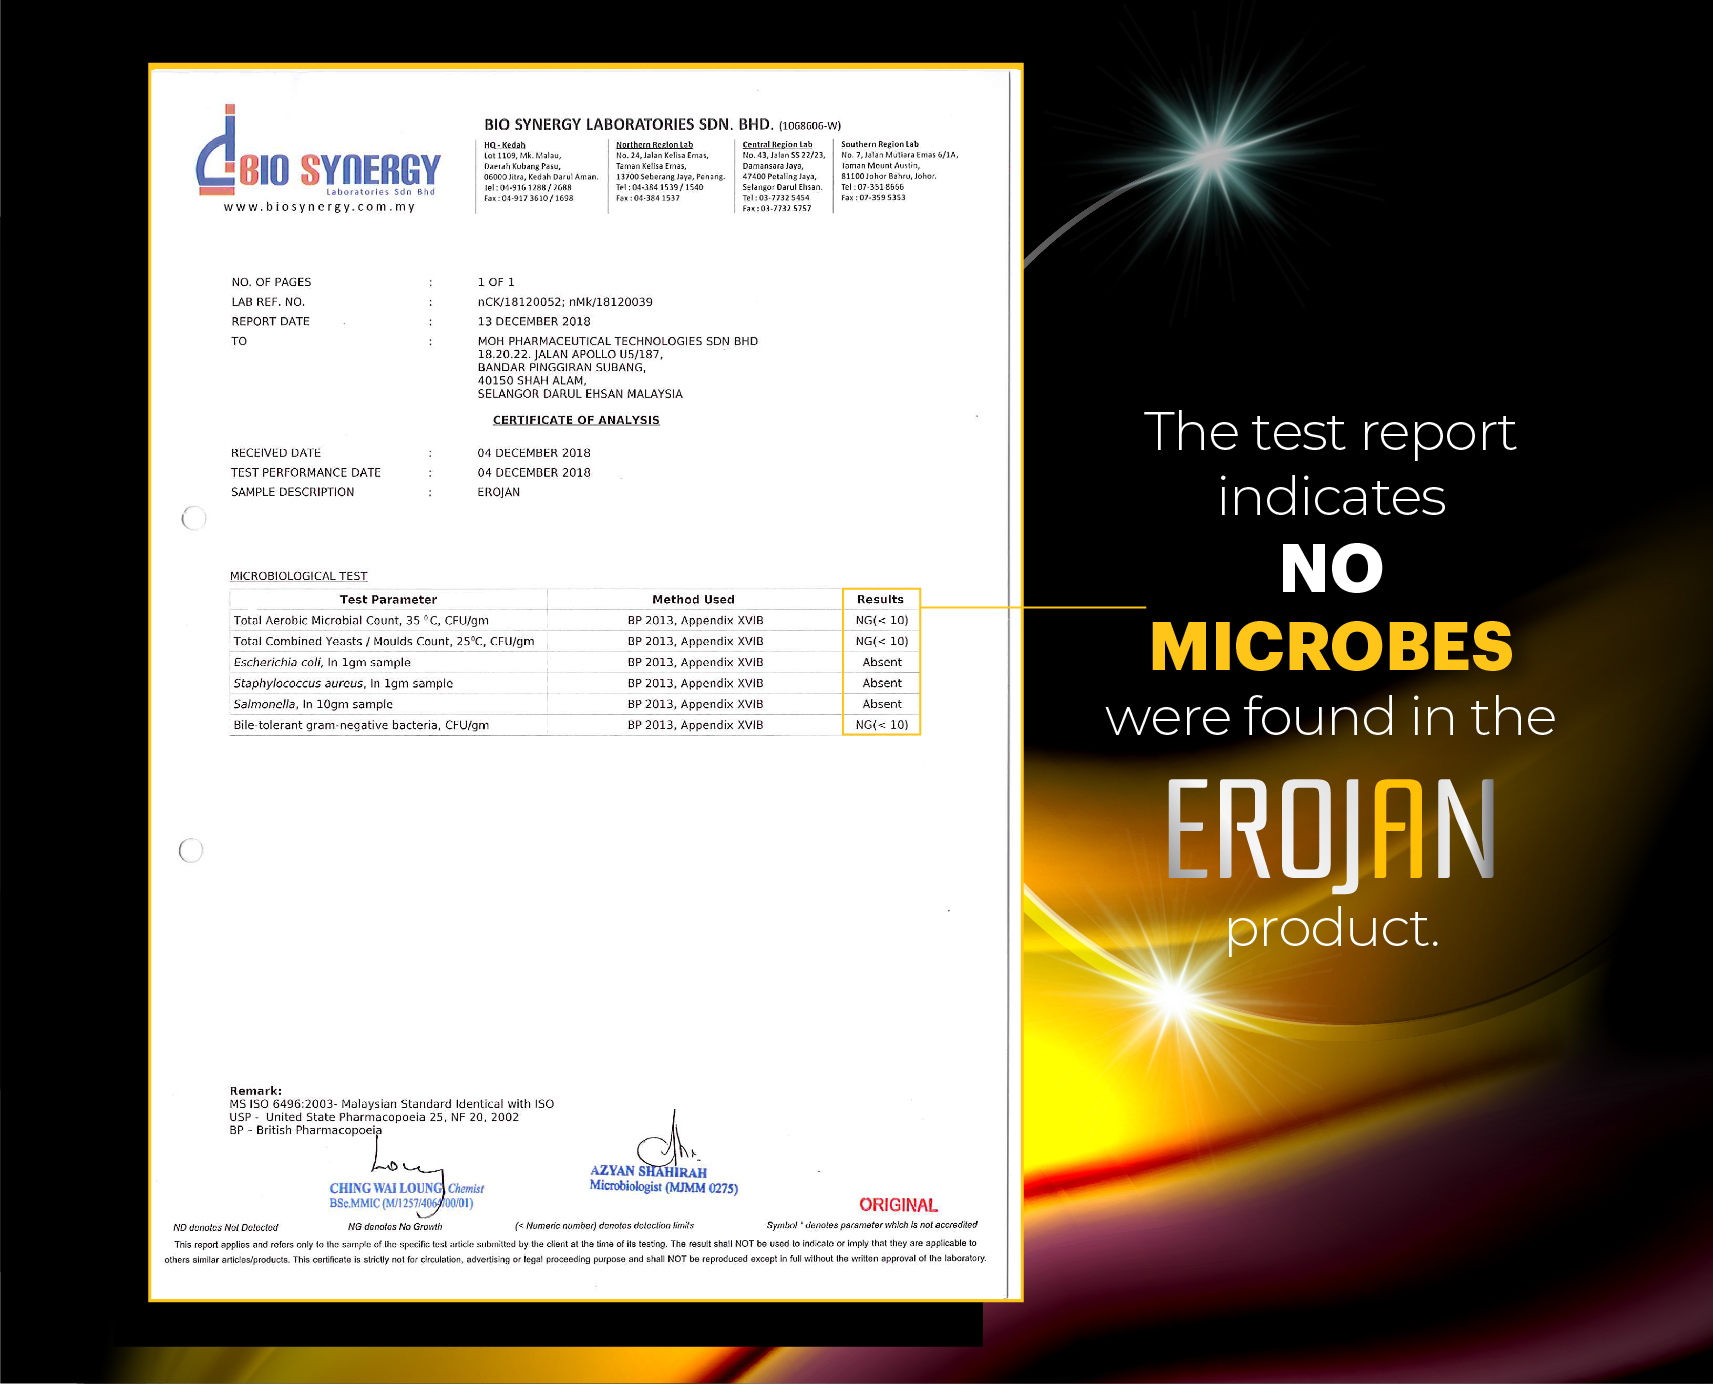 EROJAN - No Microbes_ENG